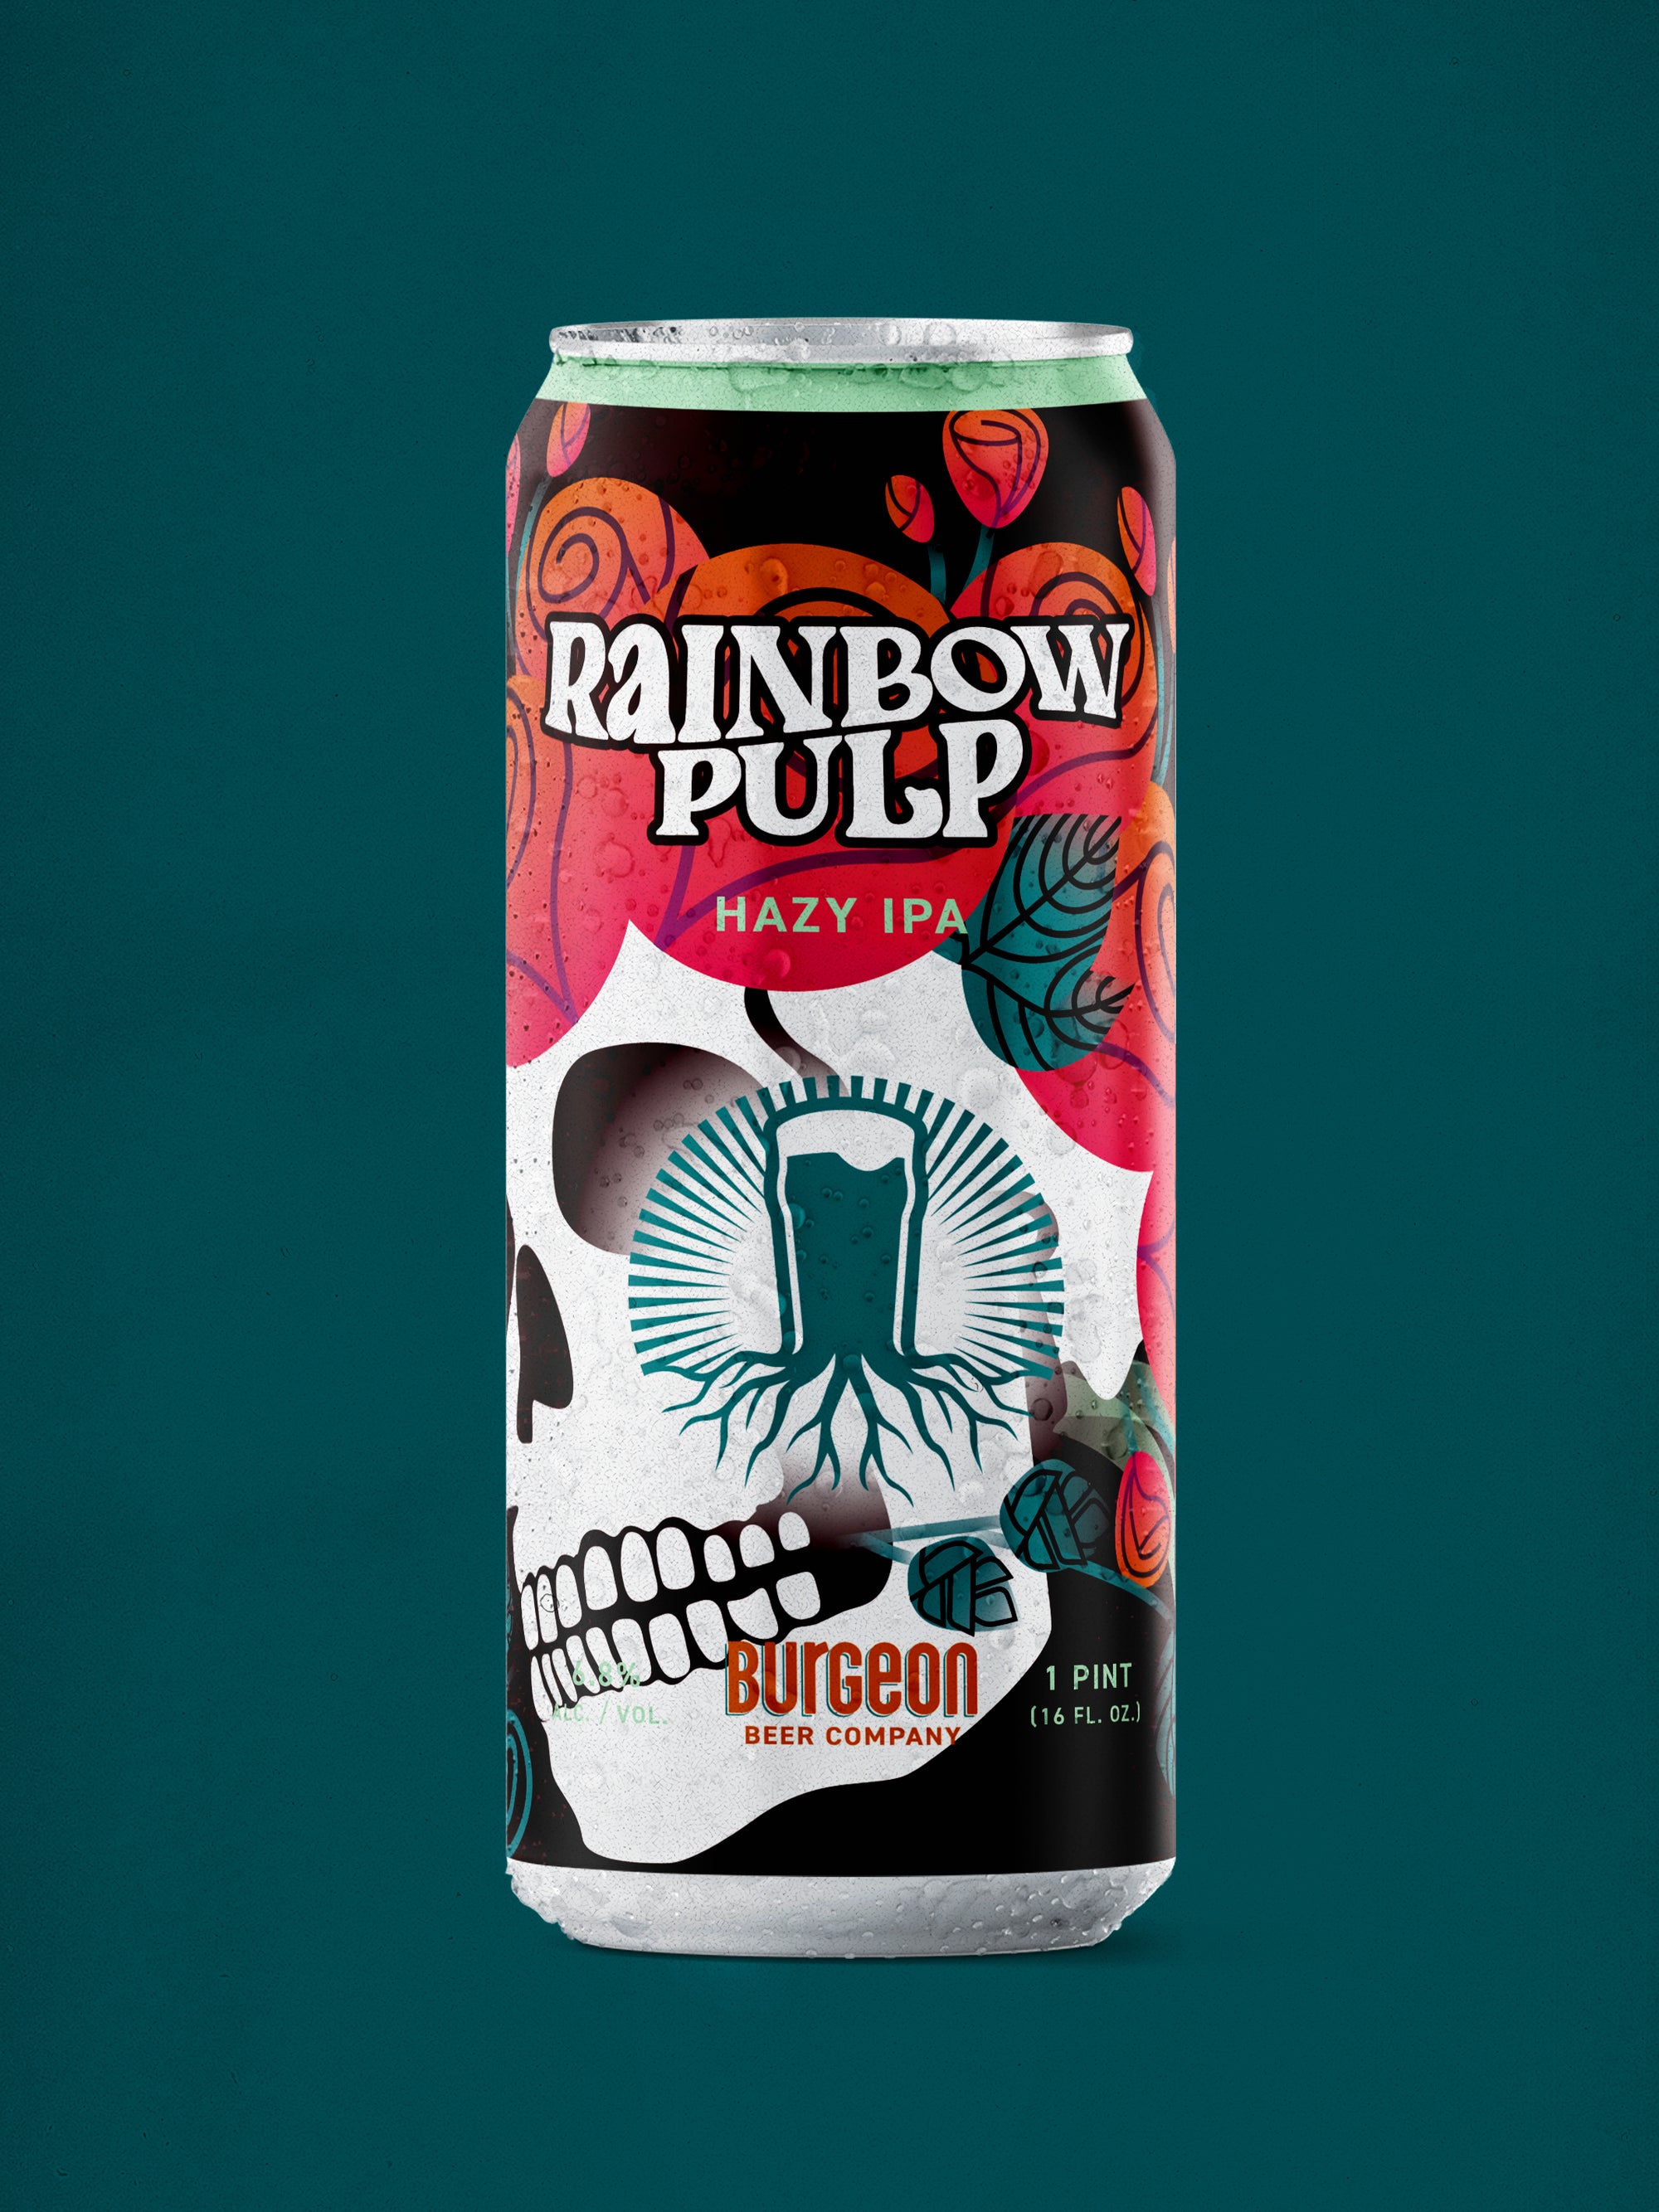 Rainbow Pulp Hazy IPA collab w/ Great Notion - 4 Pack